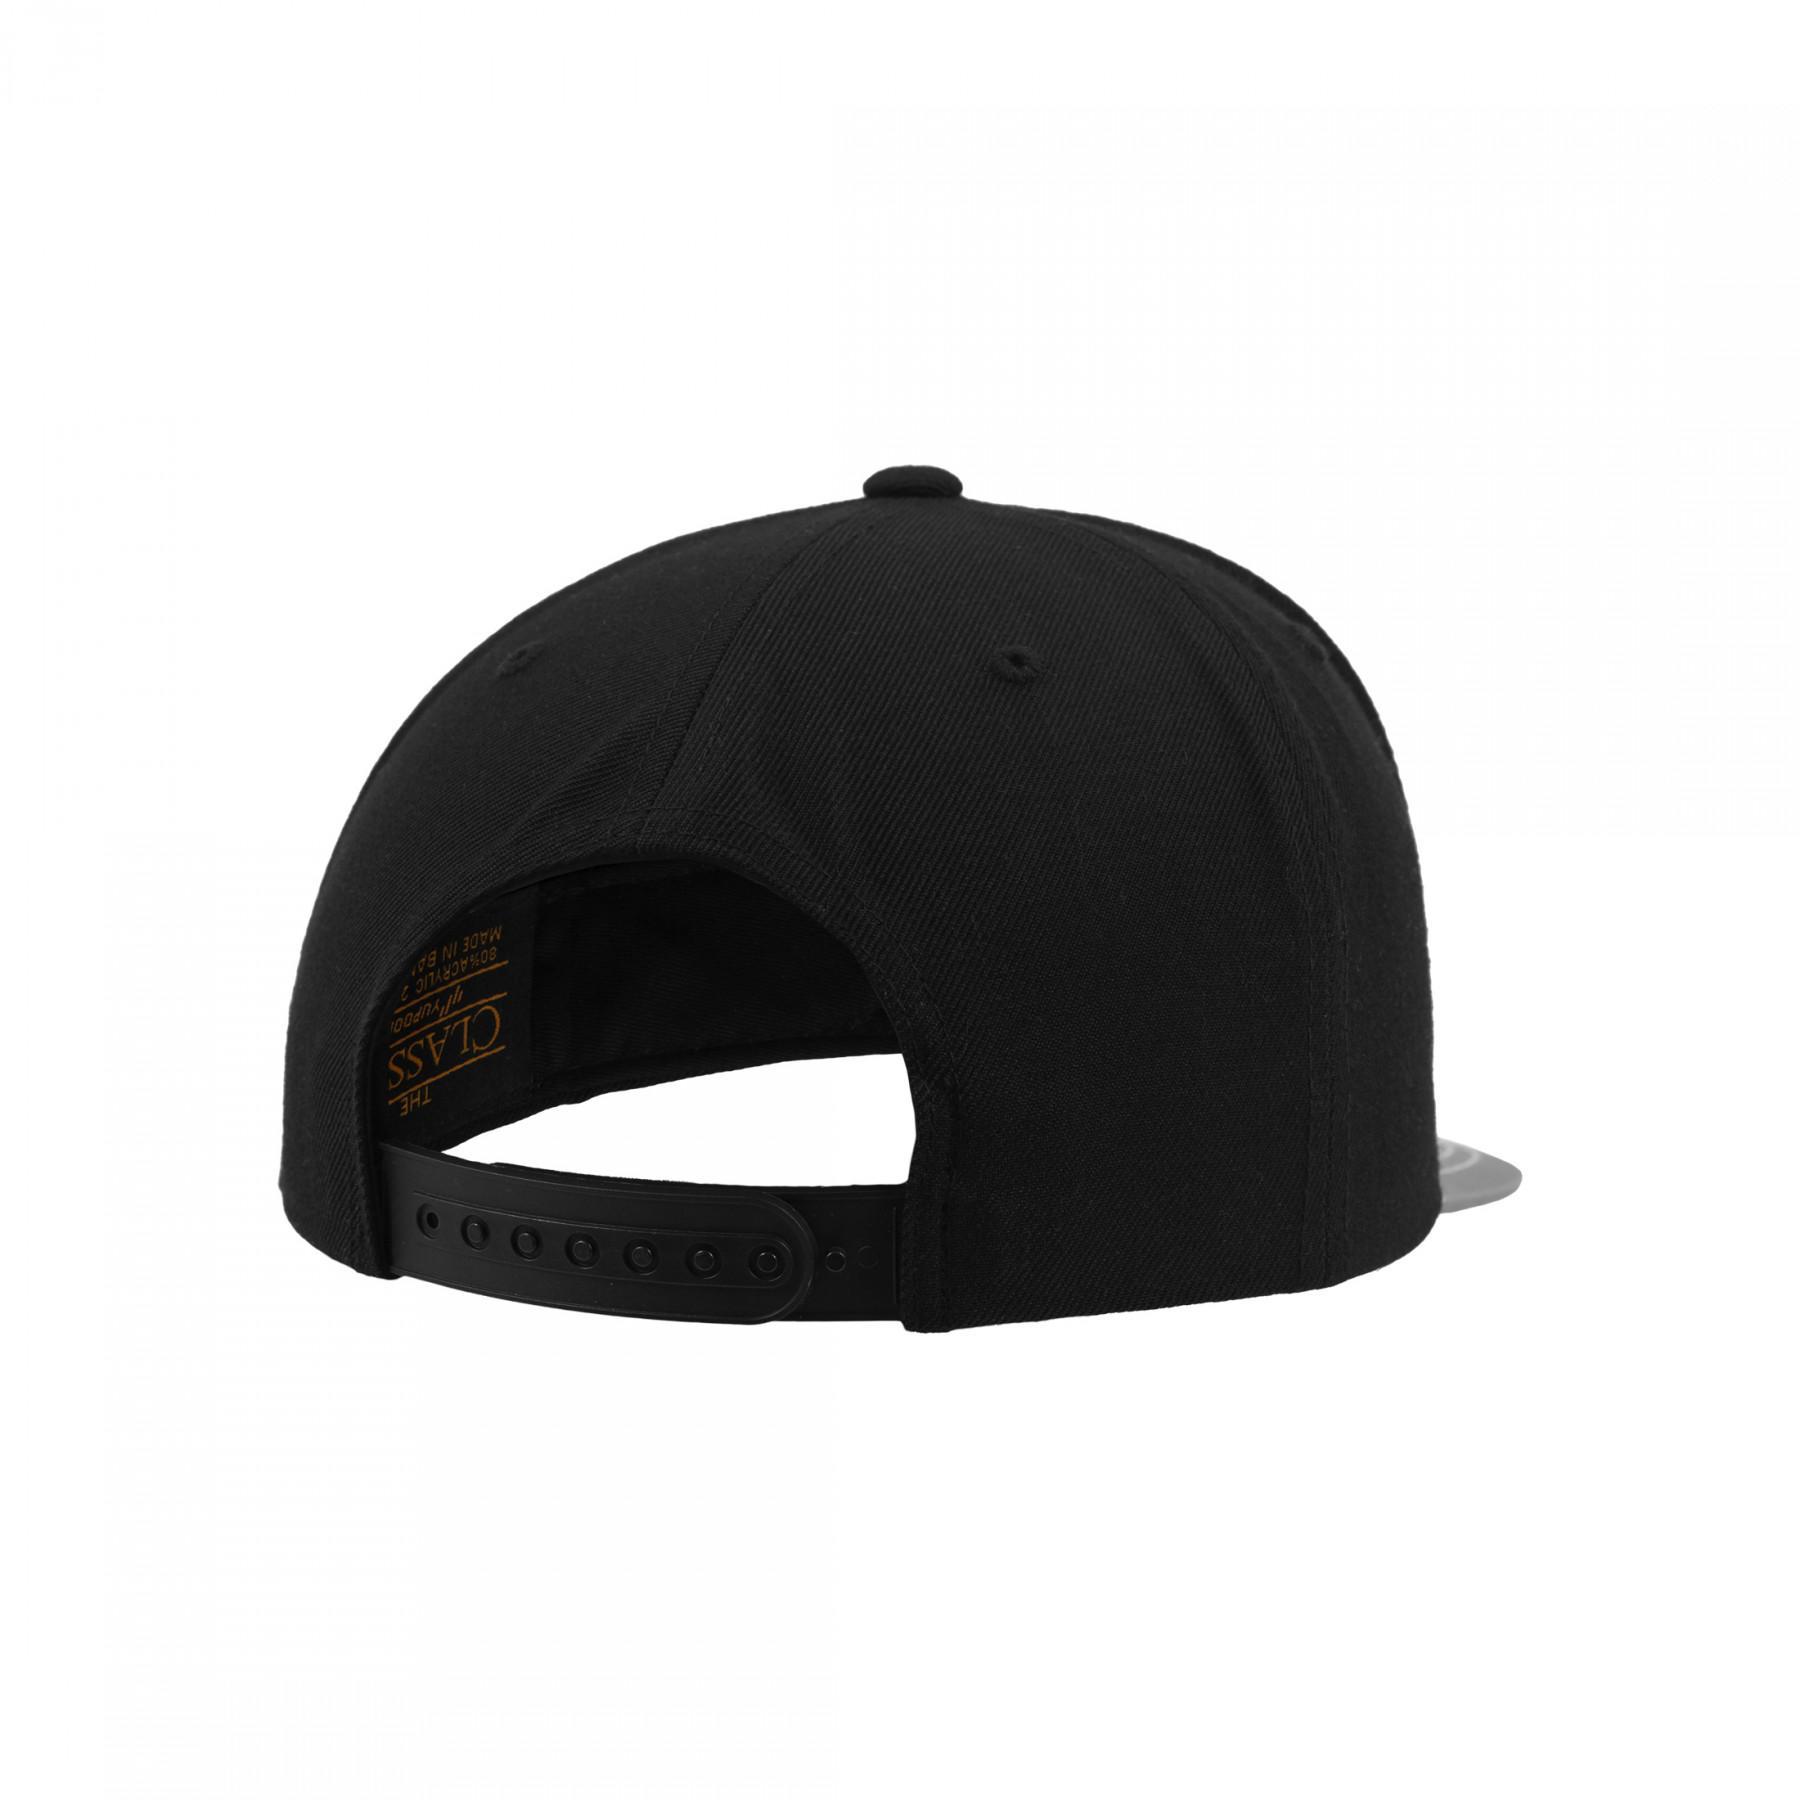 Kappe Flexfit reflective visor